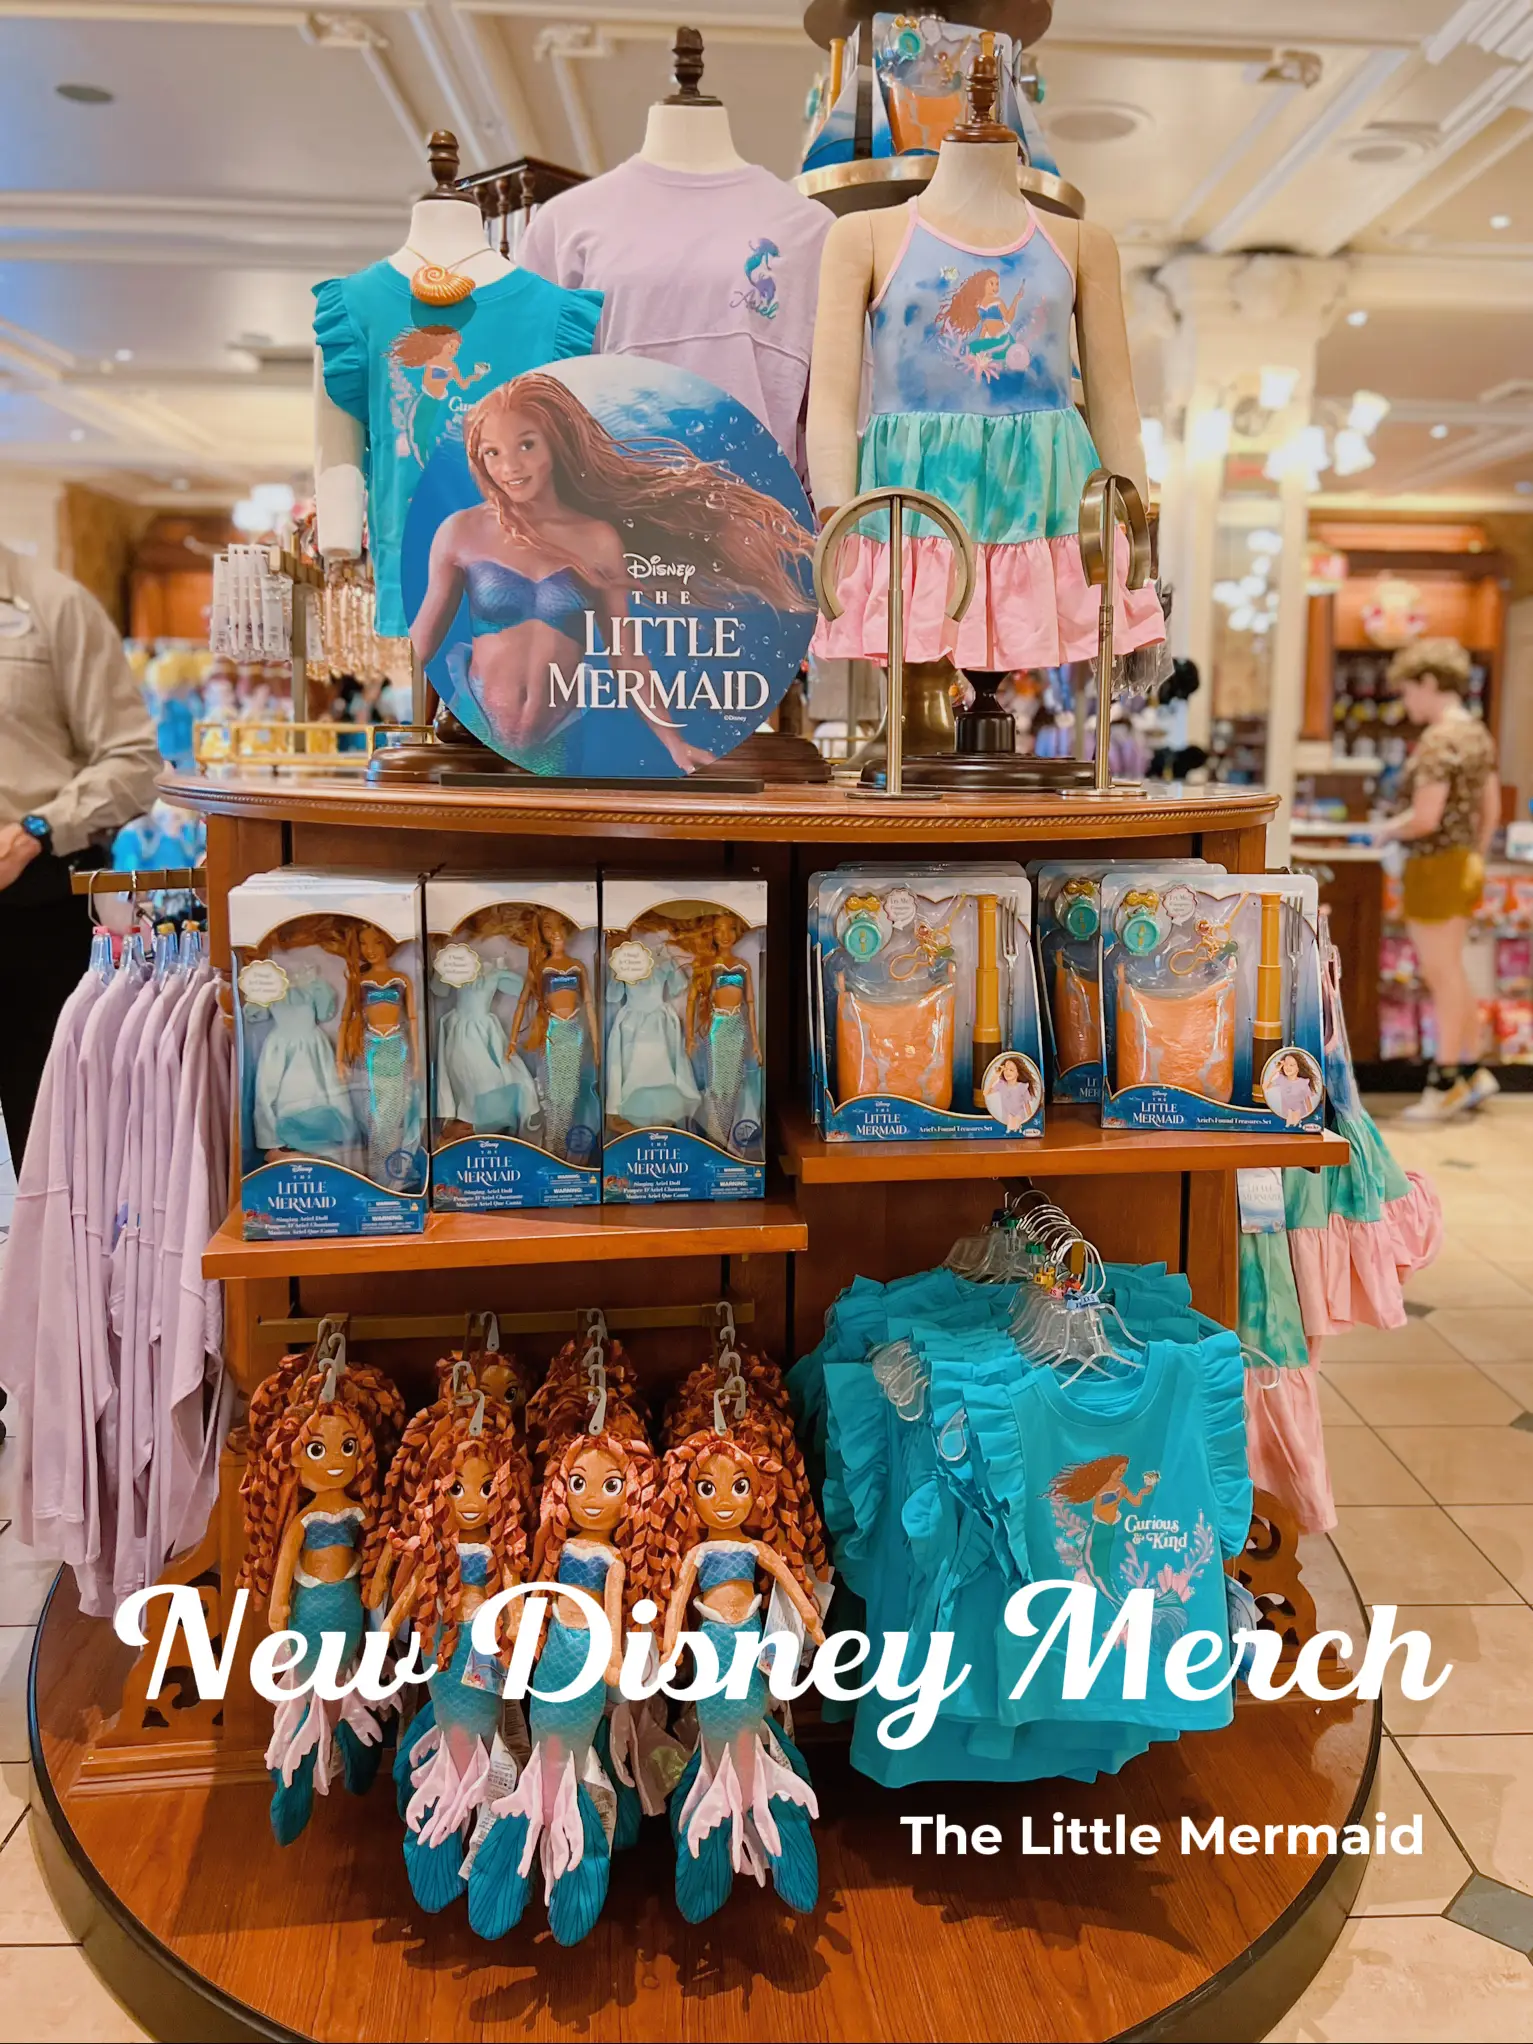 New Disney Merch - The Little Mermaid's images